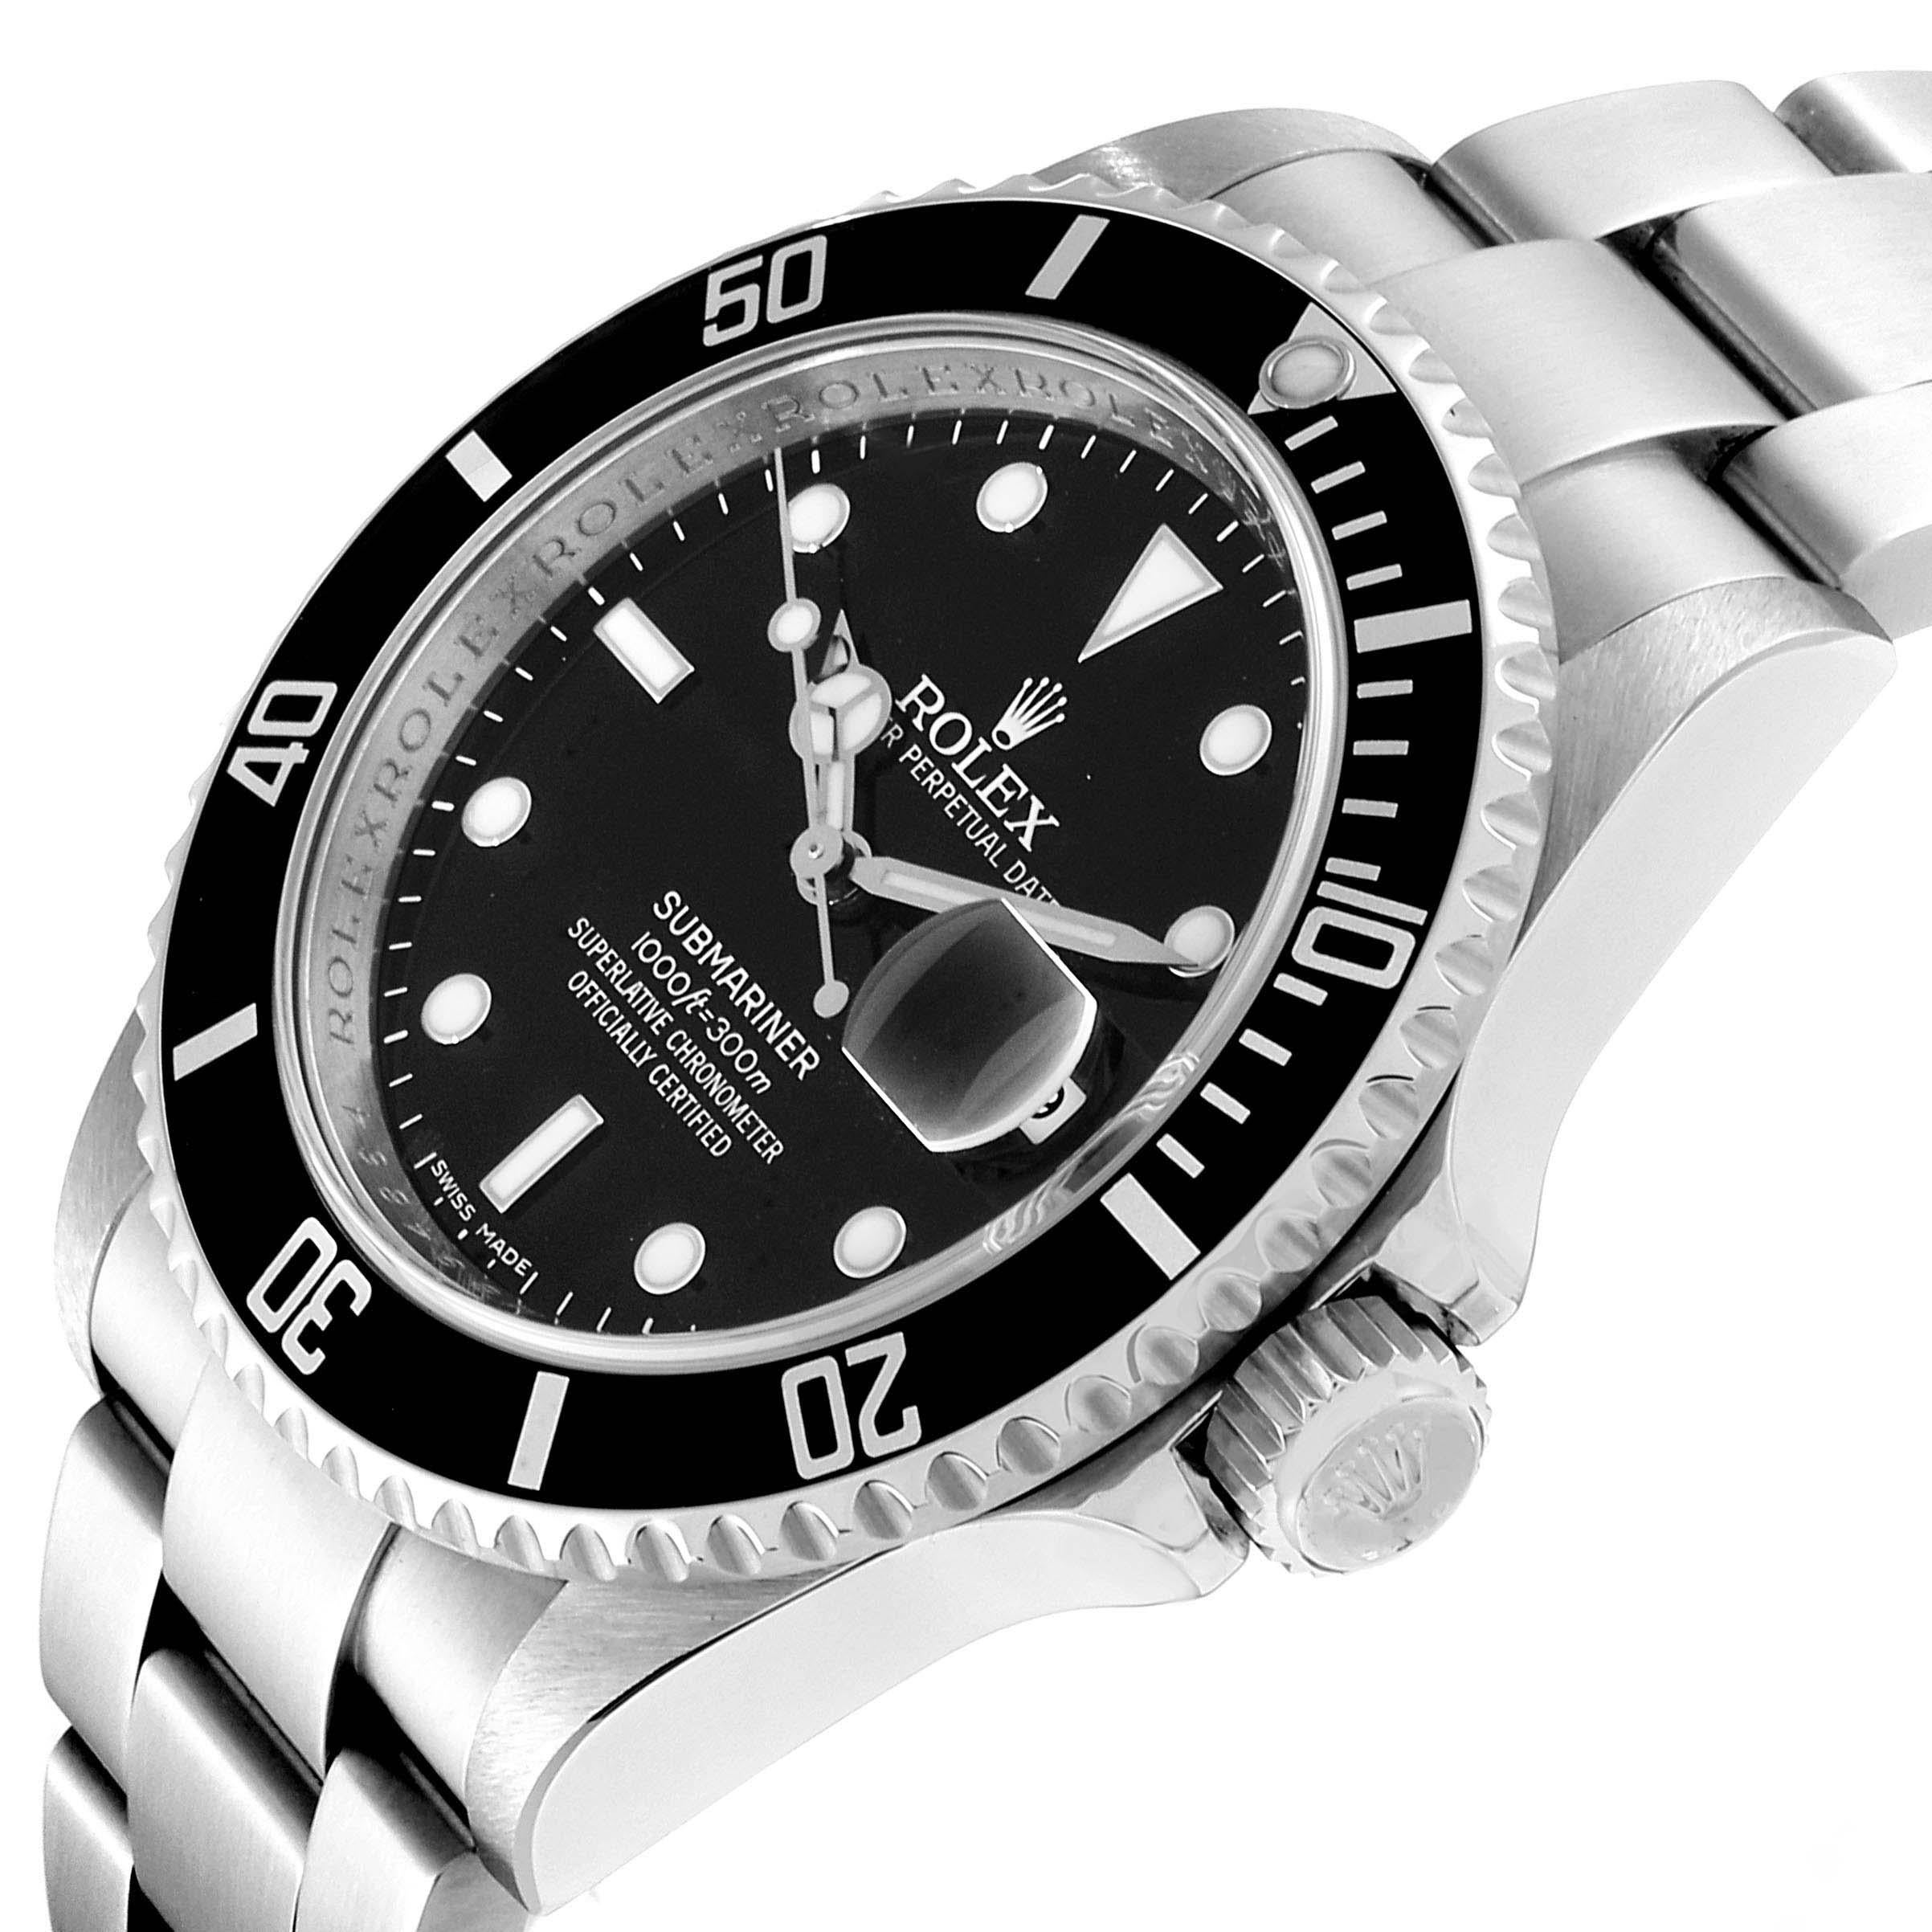 Rolex Submariner Date Stainless Steel Men's Watch 16610 Box Card 2